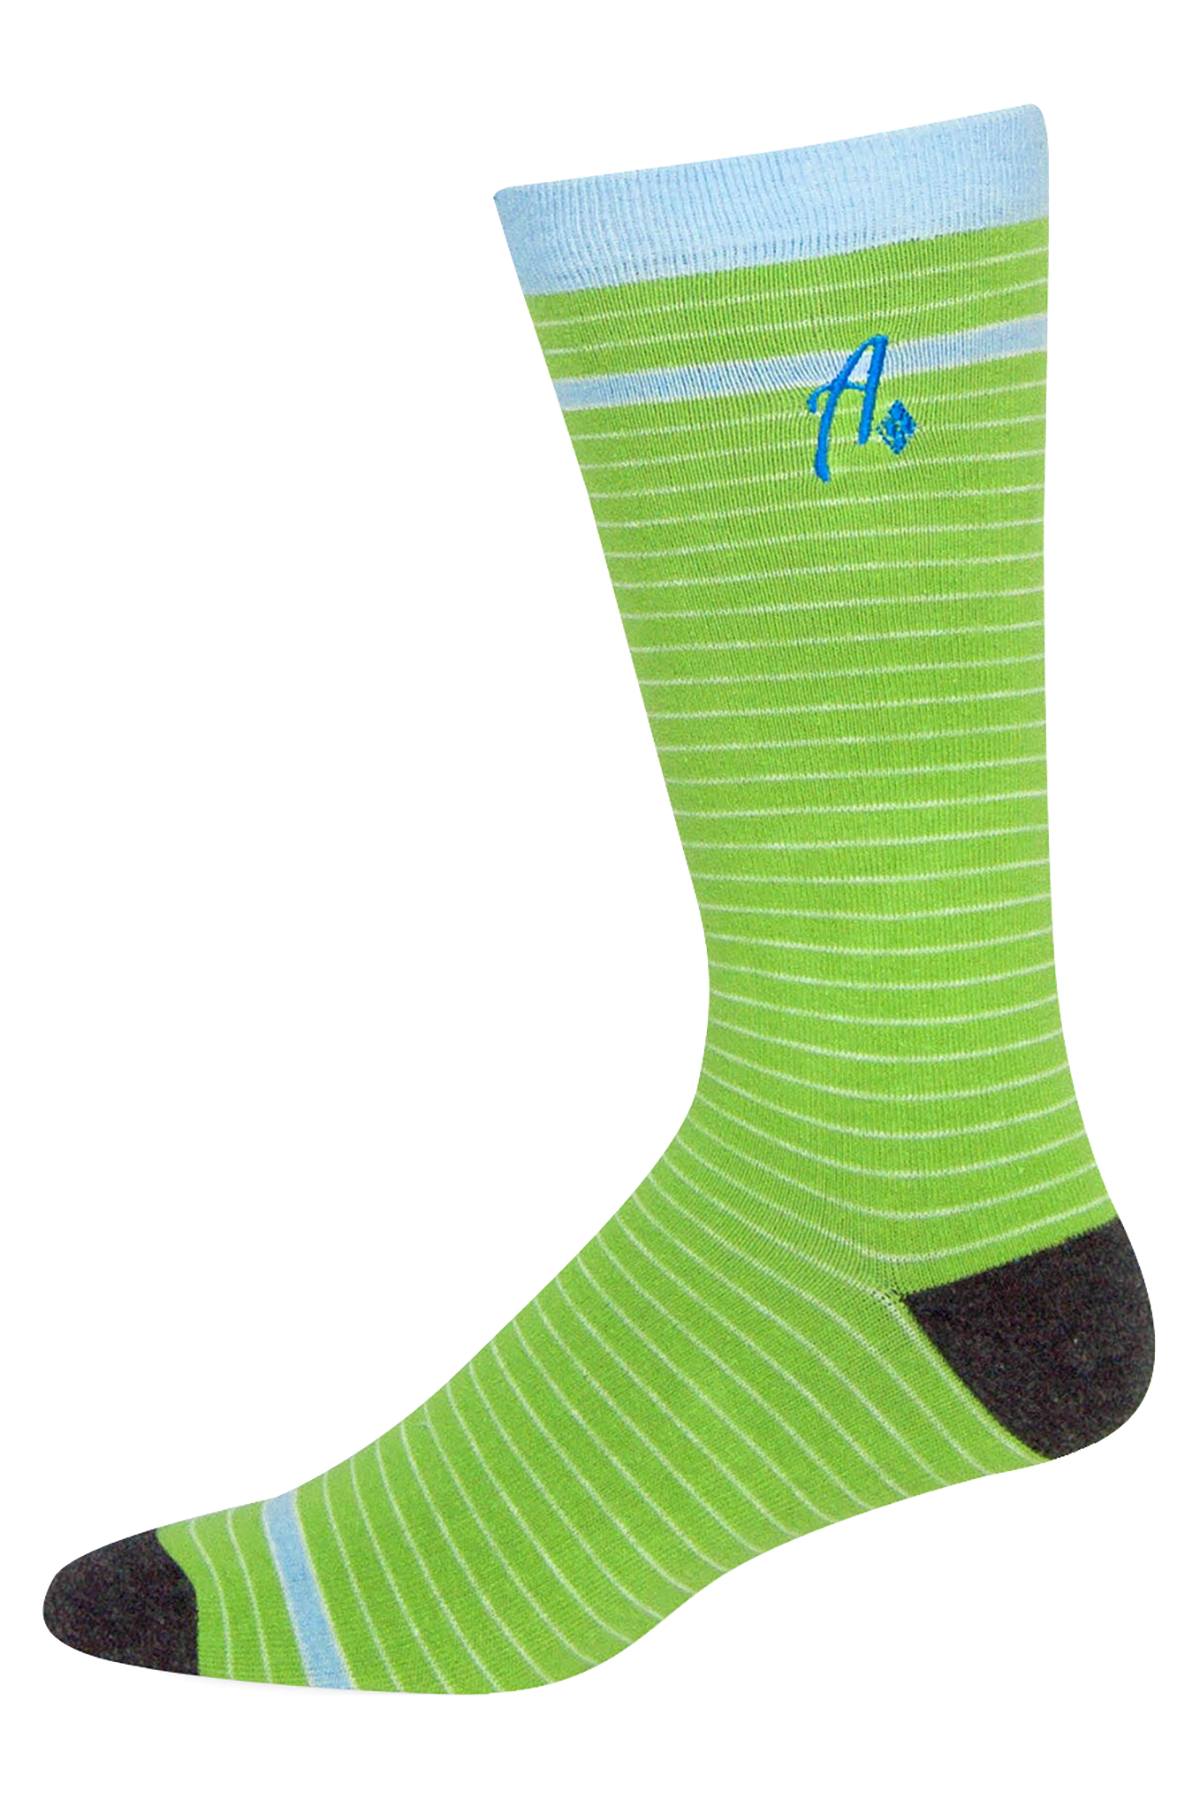 Argoz Green Wasabi Crew Sock